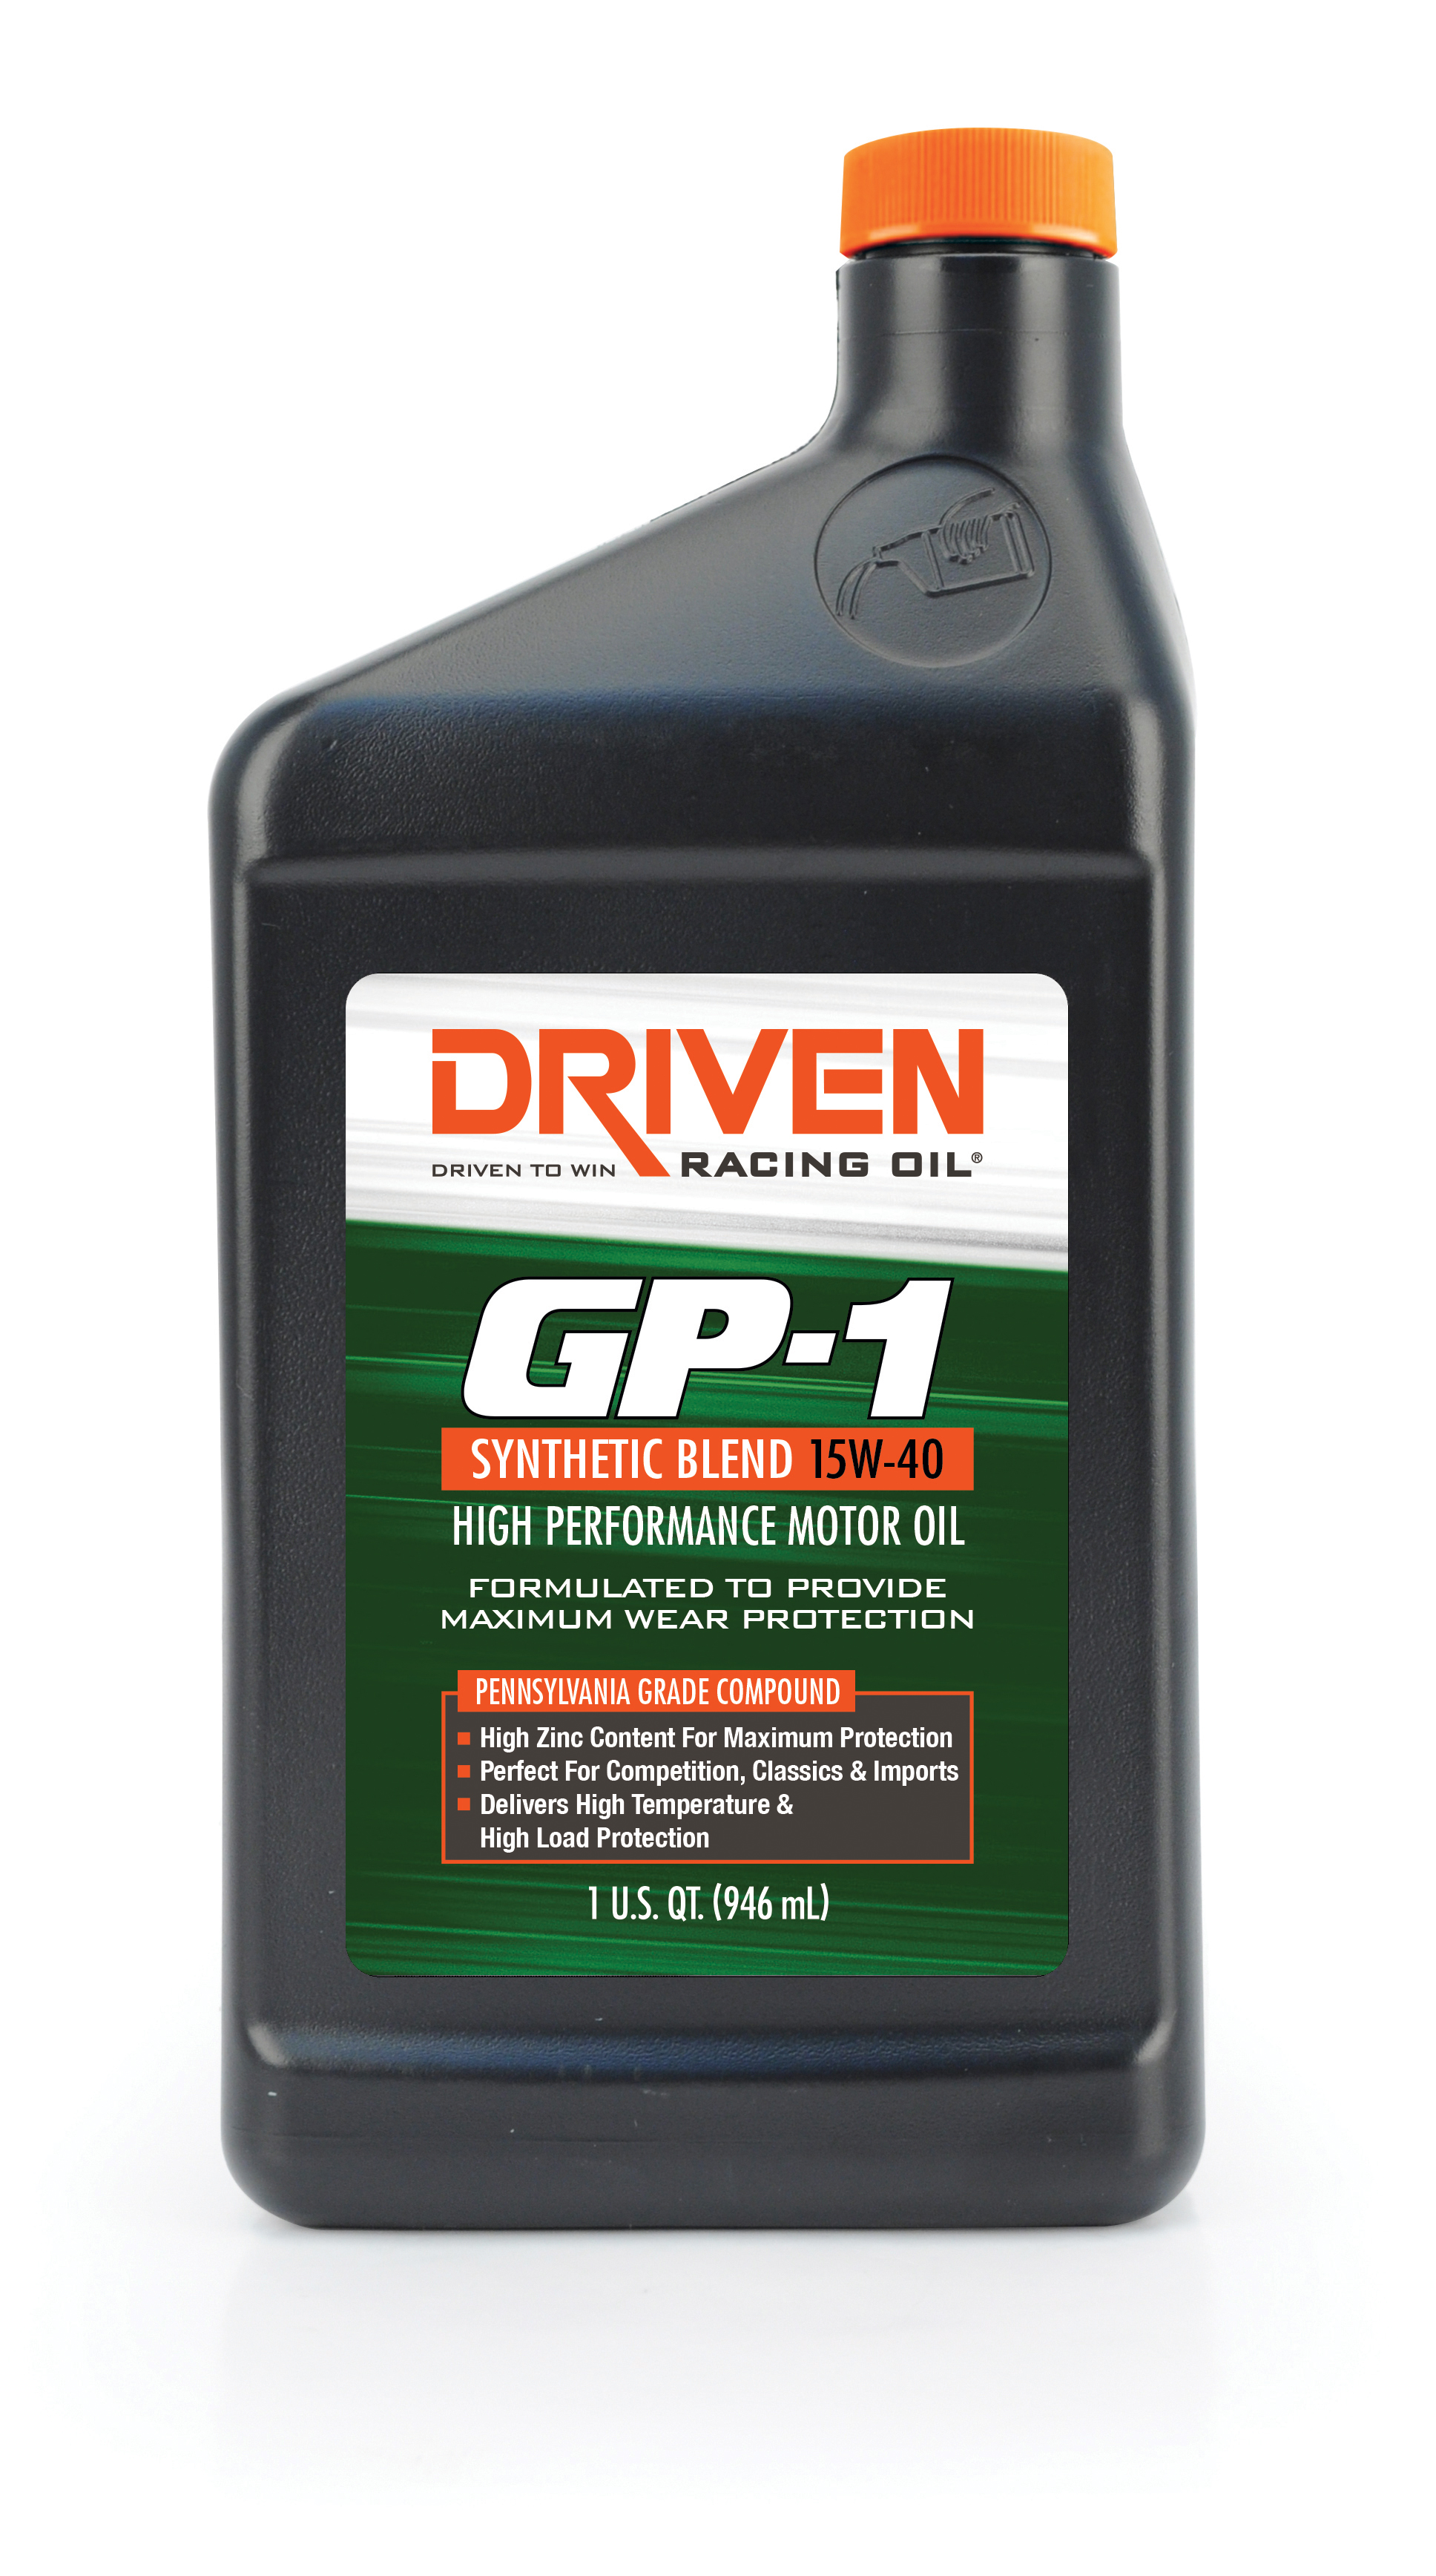 Driven GP1 15W-40 Synthetic Blend Racing Oil - 1 Quart Bottle 19406